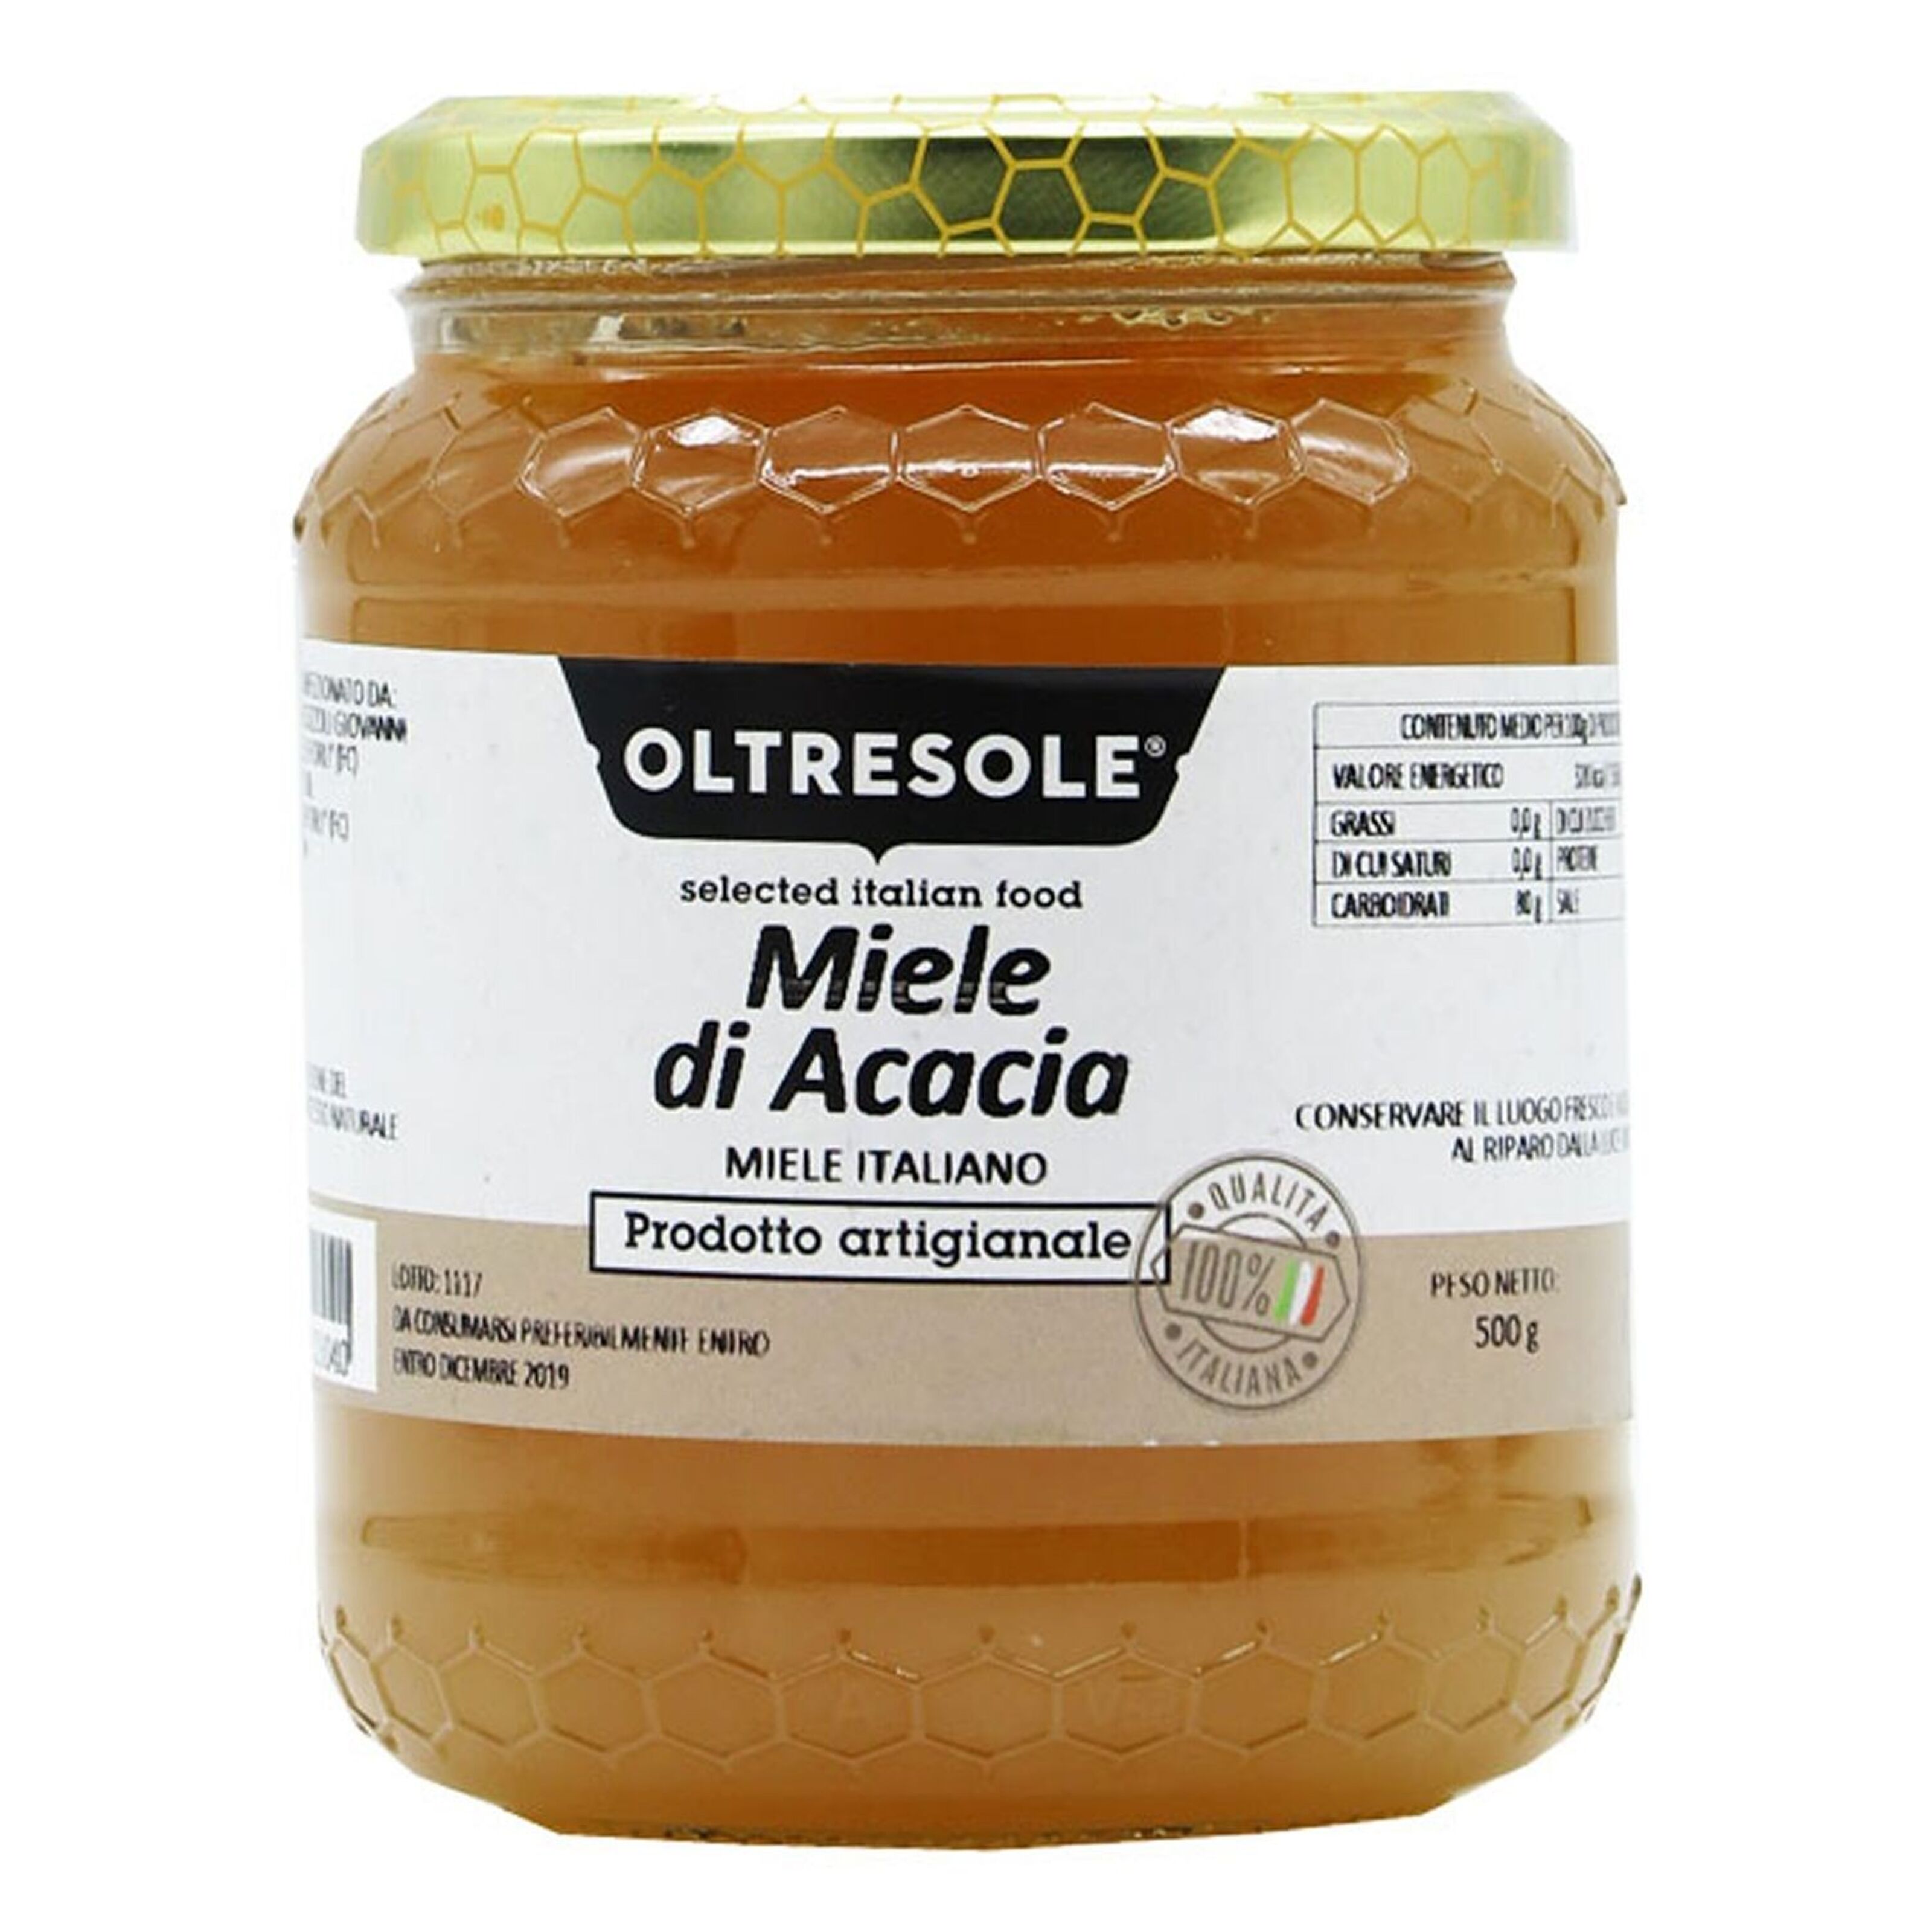 Miel d'acacia for sale